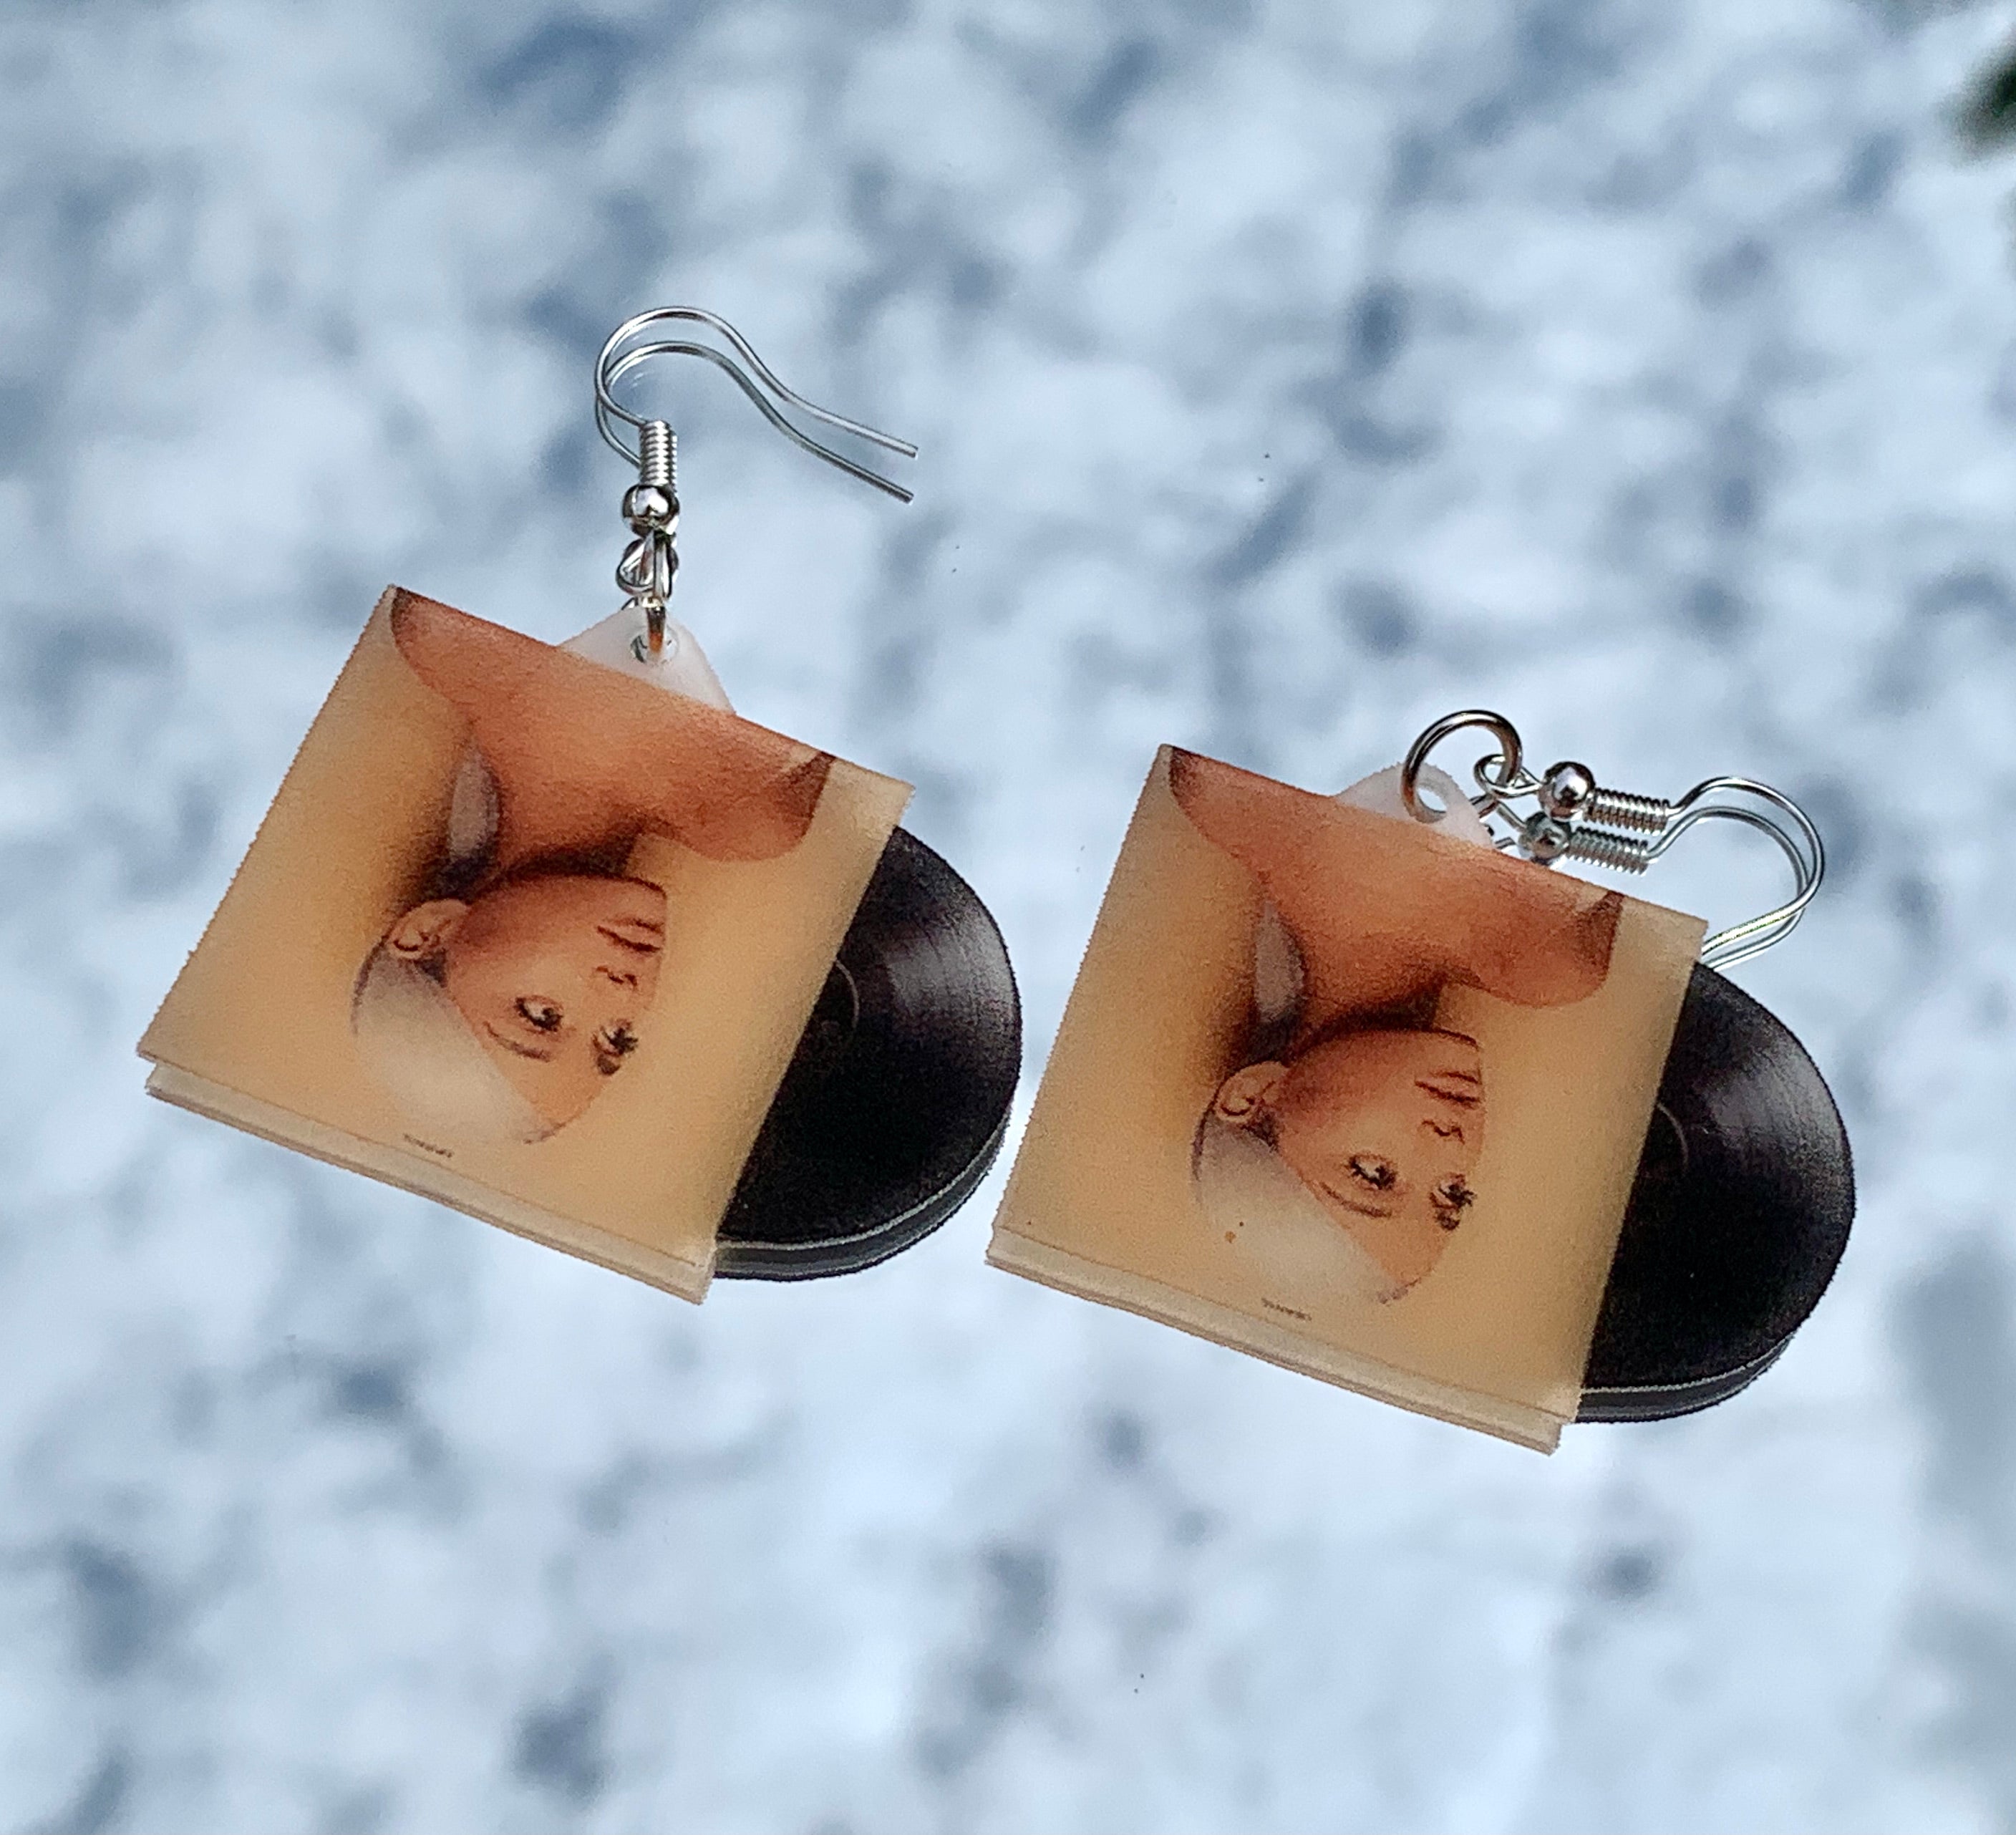 Ariana Grande Sweetener Vinyl Album Handmade Earrings!